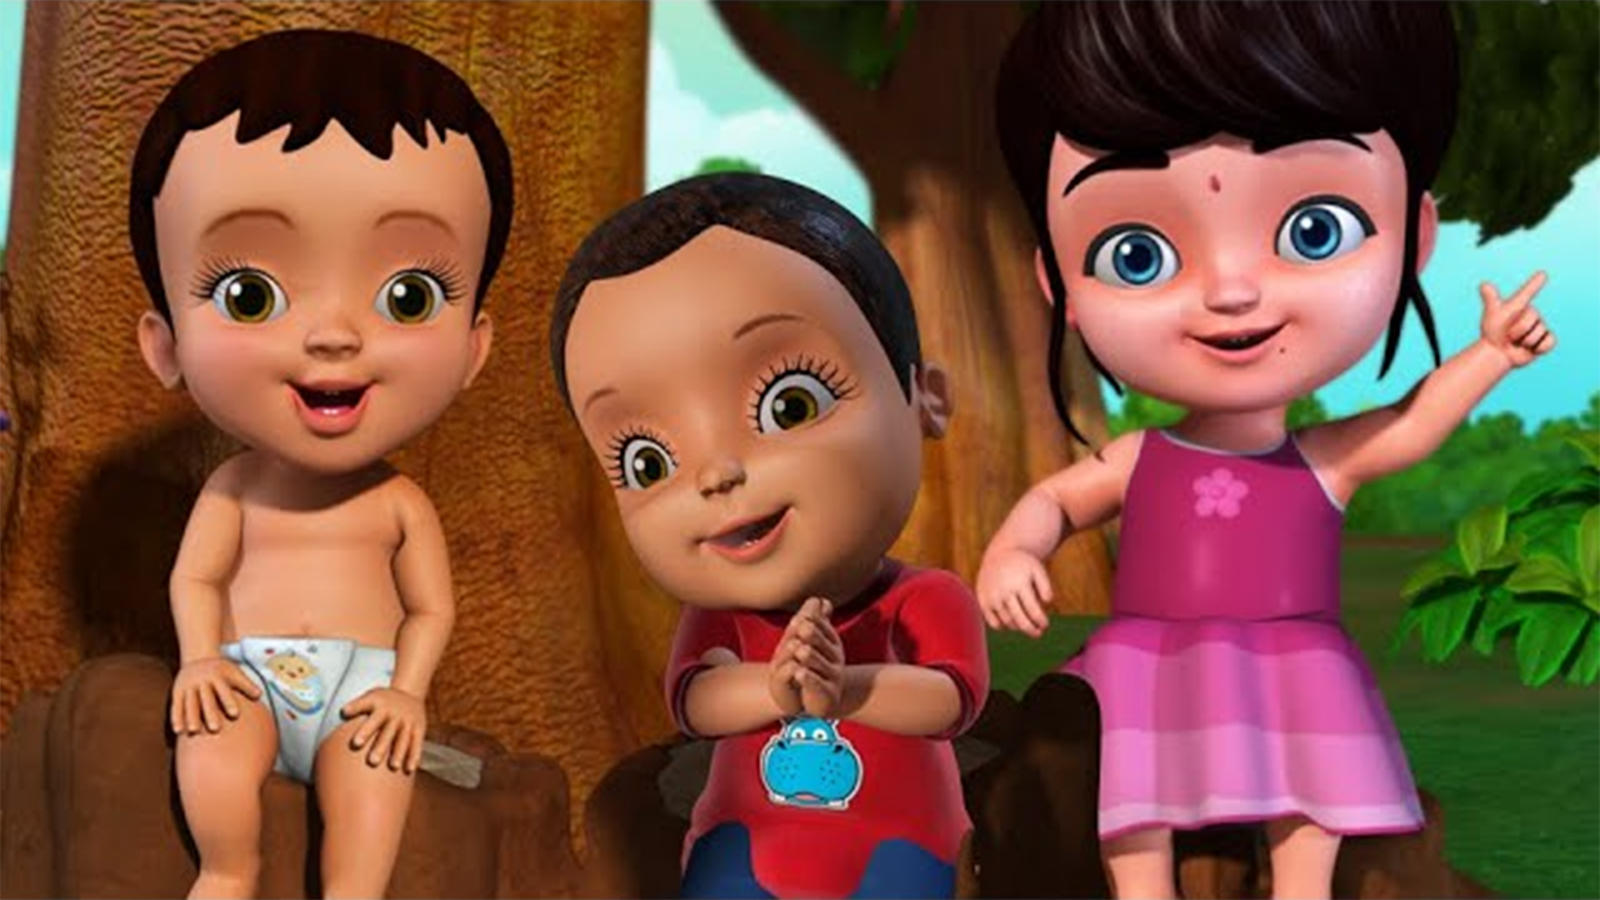 Watch Latest Children Hindi Nursery Rhyme 'Taaliyaan Bajaana, Taaliyaan  Bajaana' for Kids - Check out Fun Kids Nursery Rhymes And Baby Songs In  Hindi | Entertainment - Times of India Videos